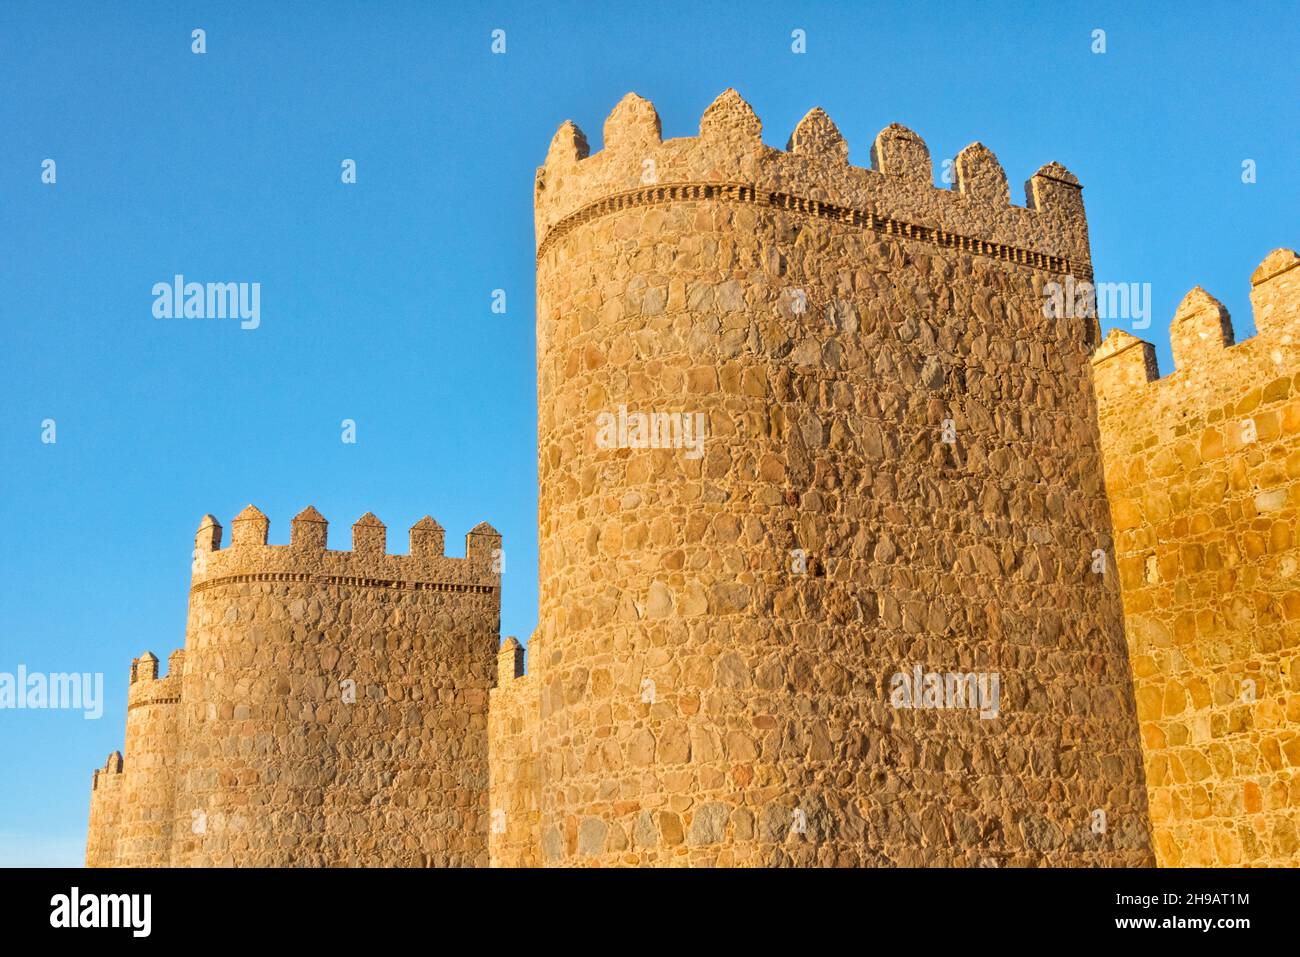 Sunset view of medieval town walls of Avila (UNESCO World Heritage site), Avila Province, Castile and Leon Autonomous Community, Spain Stock Photo